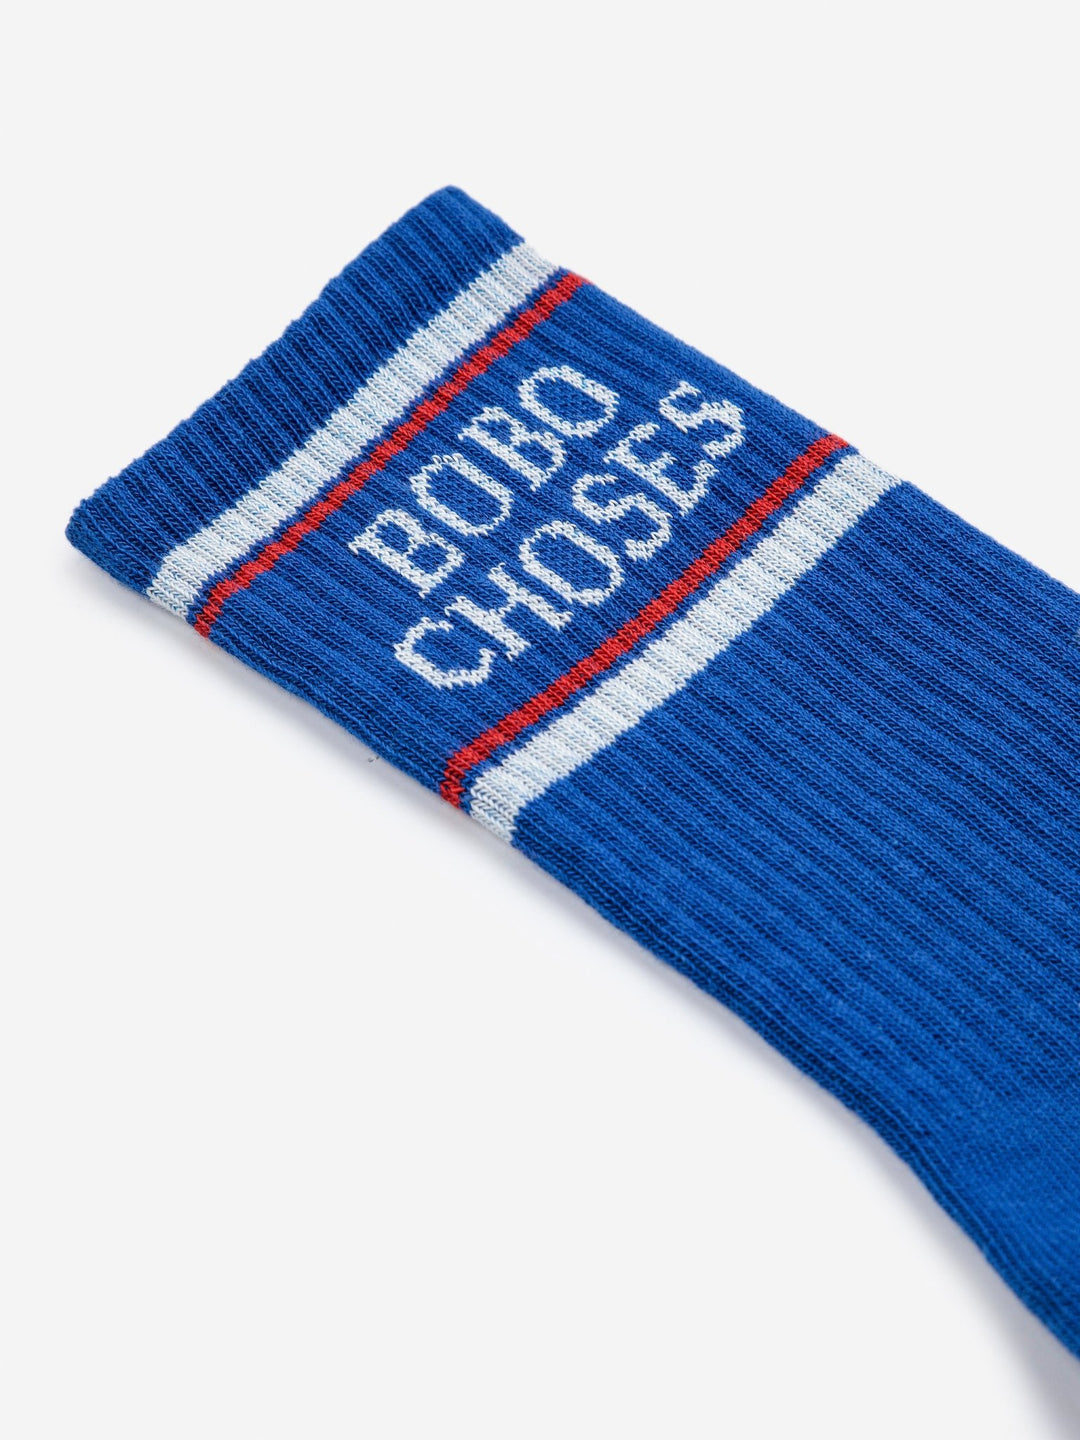 Bobo Choses Long Socks - Blue - Posh New York